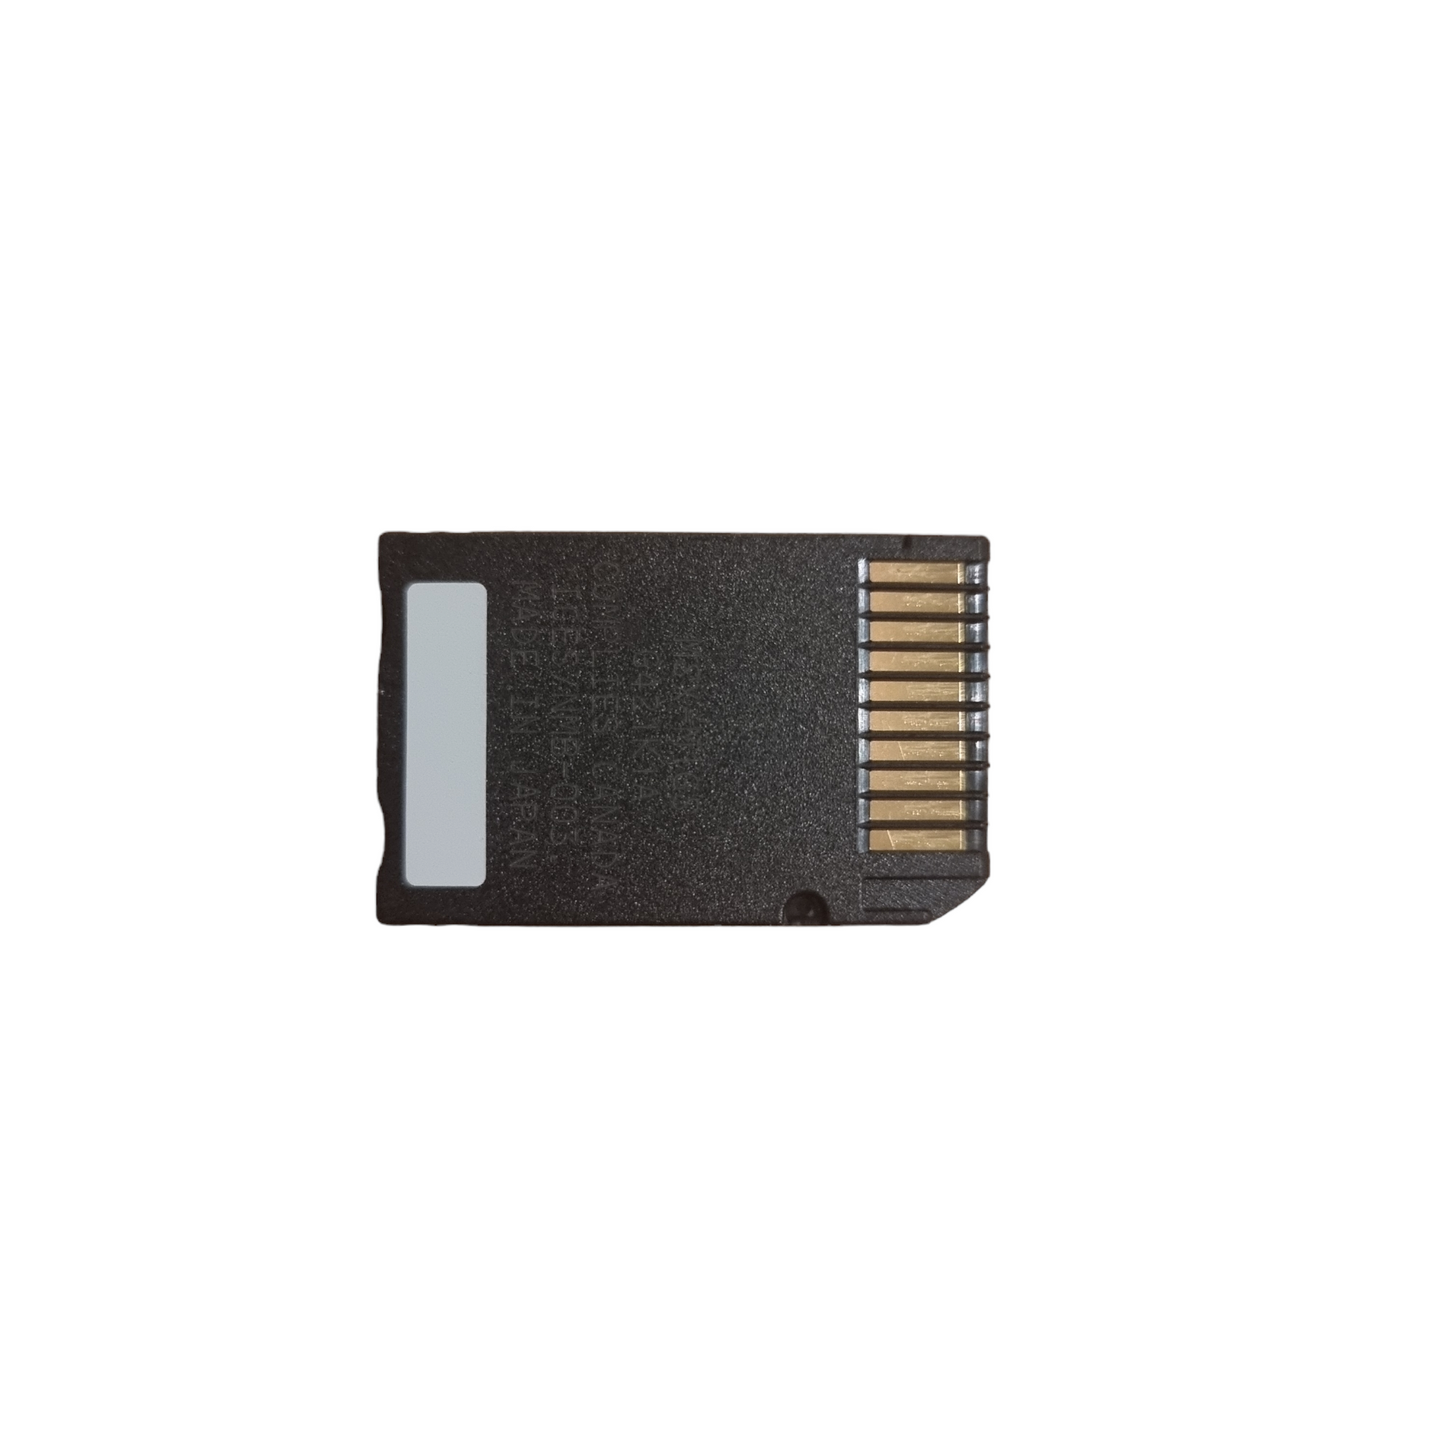 Sony Memory Stick Pro Duo - 1GB